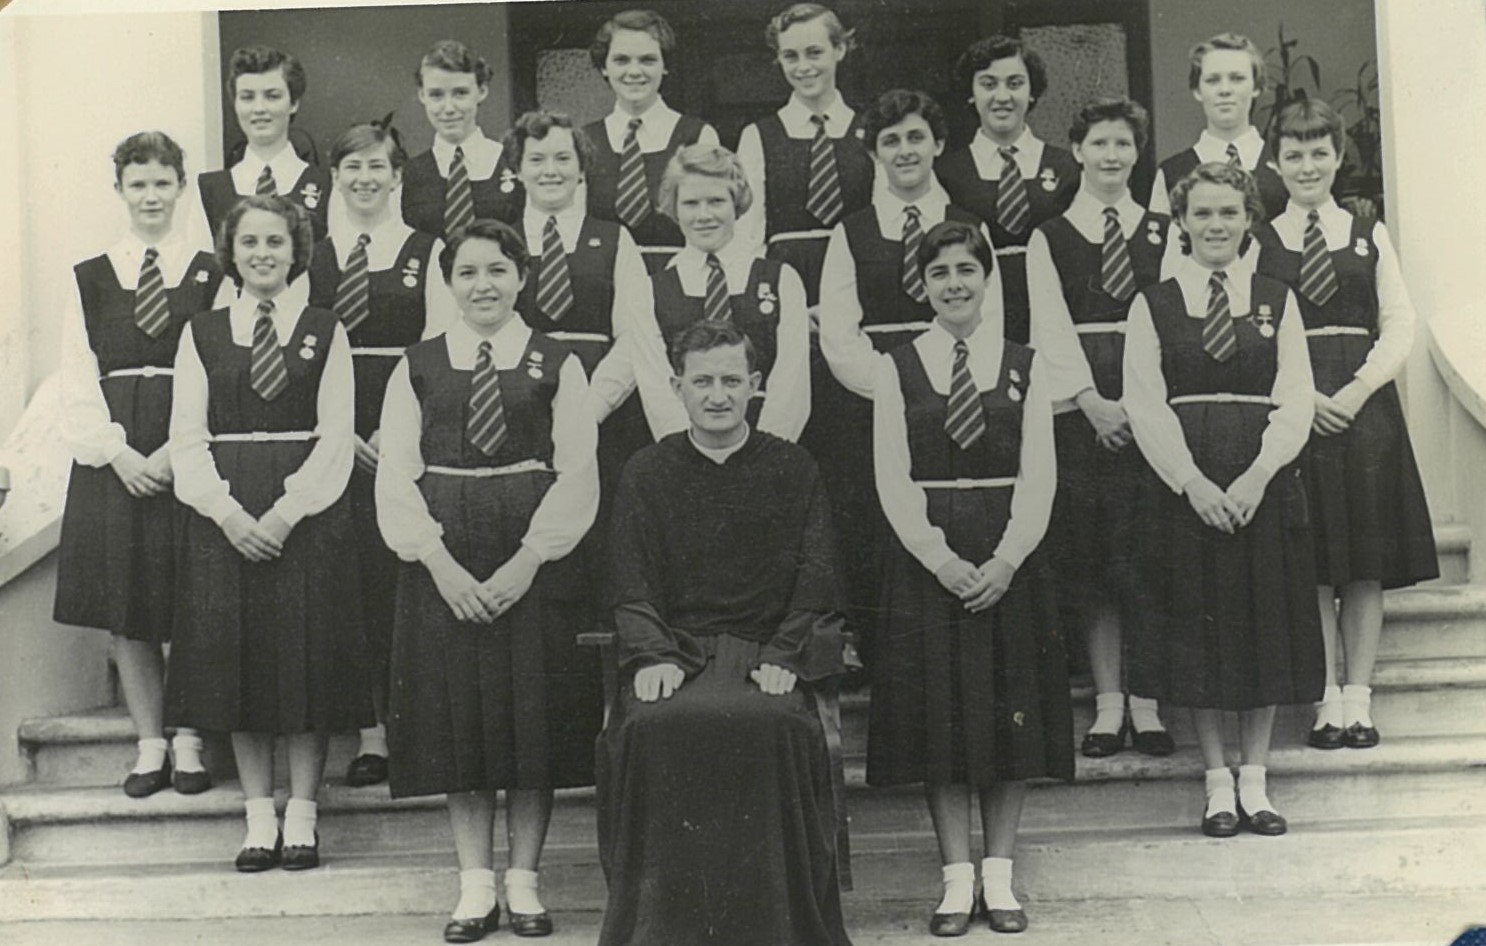 1956 Seniors and Sub Seniors